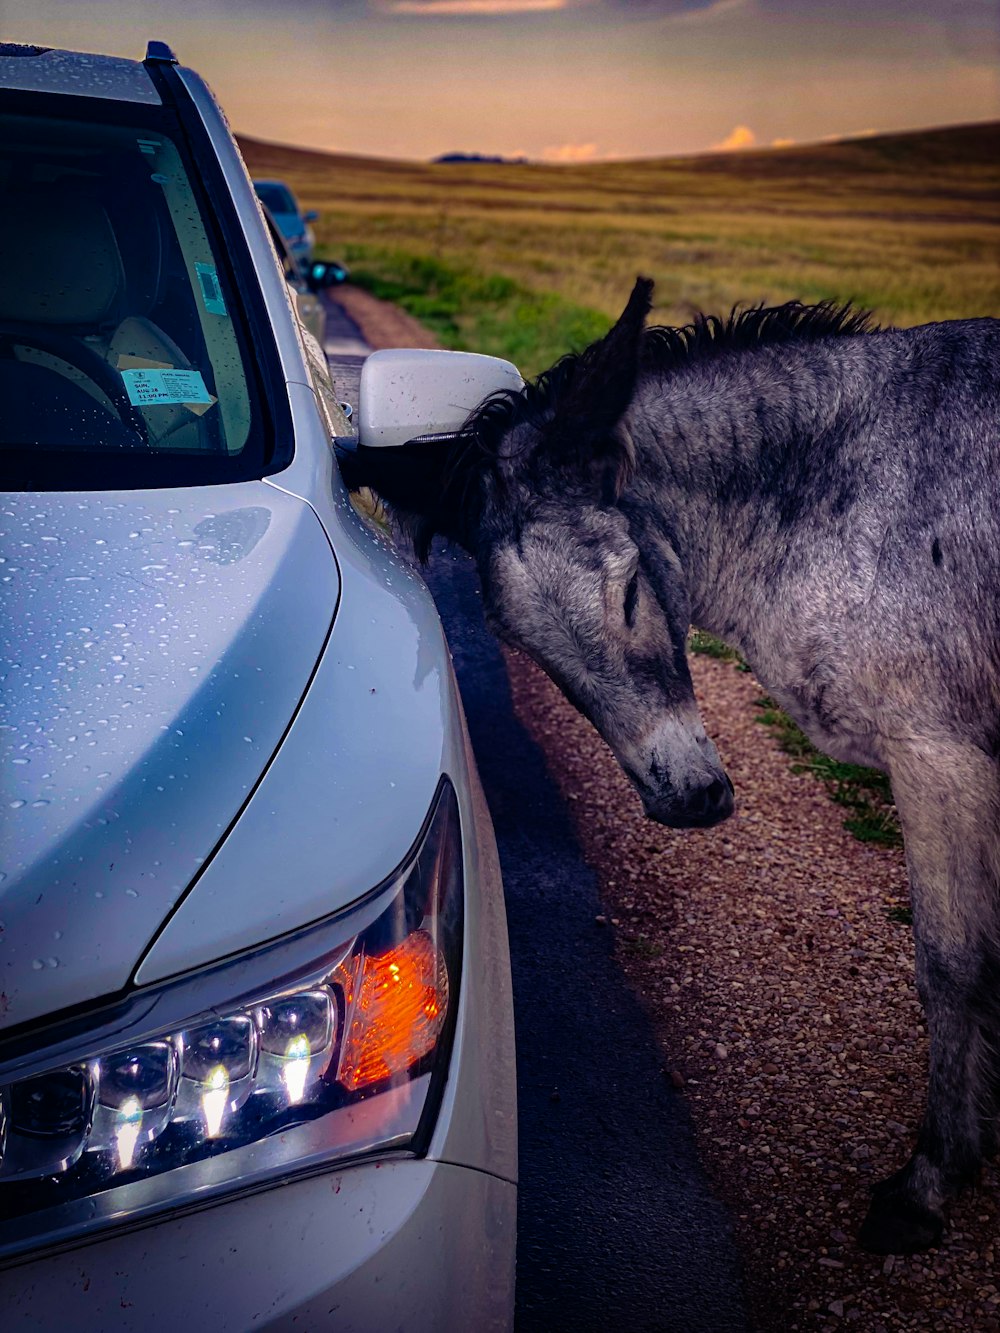 a donkey next to a car